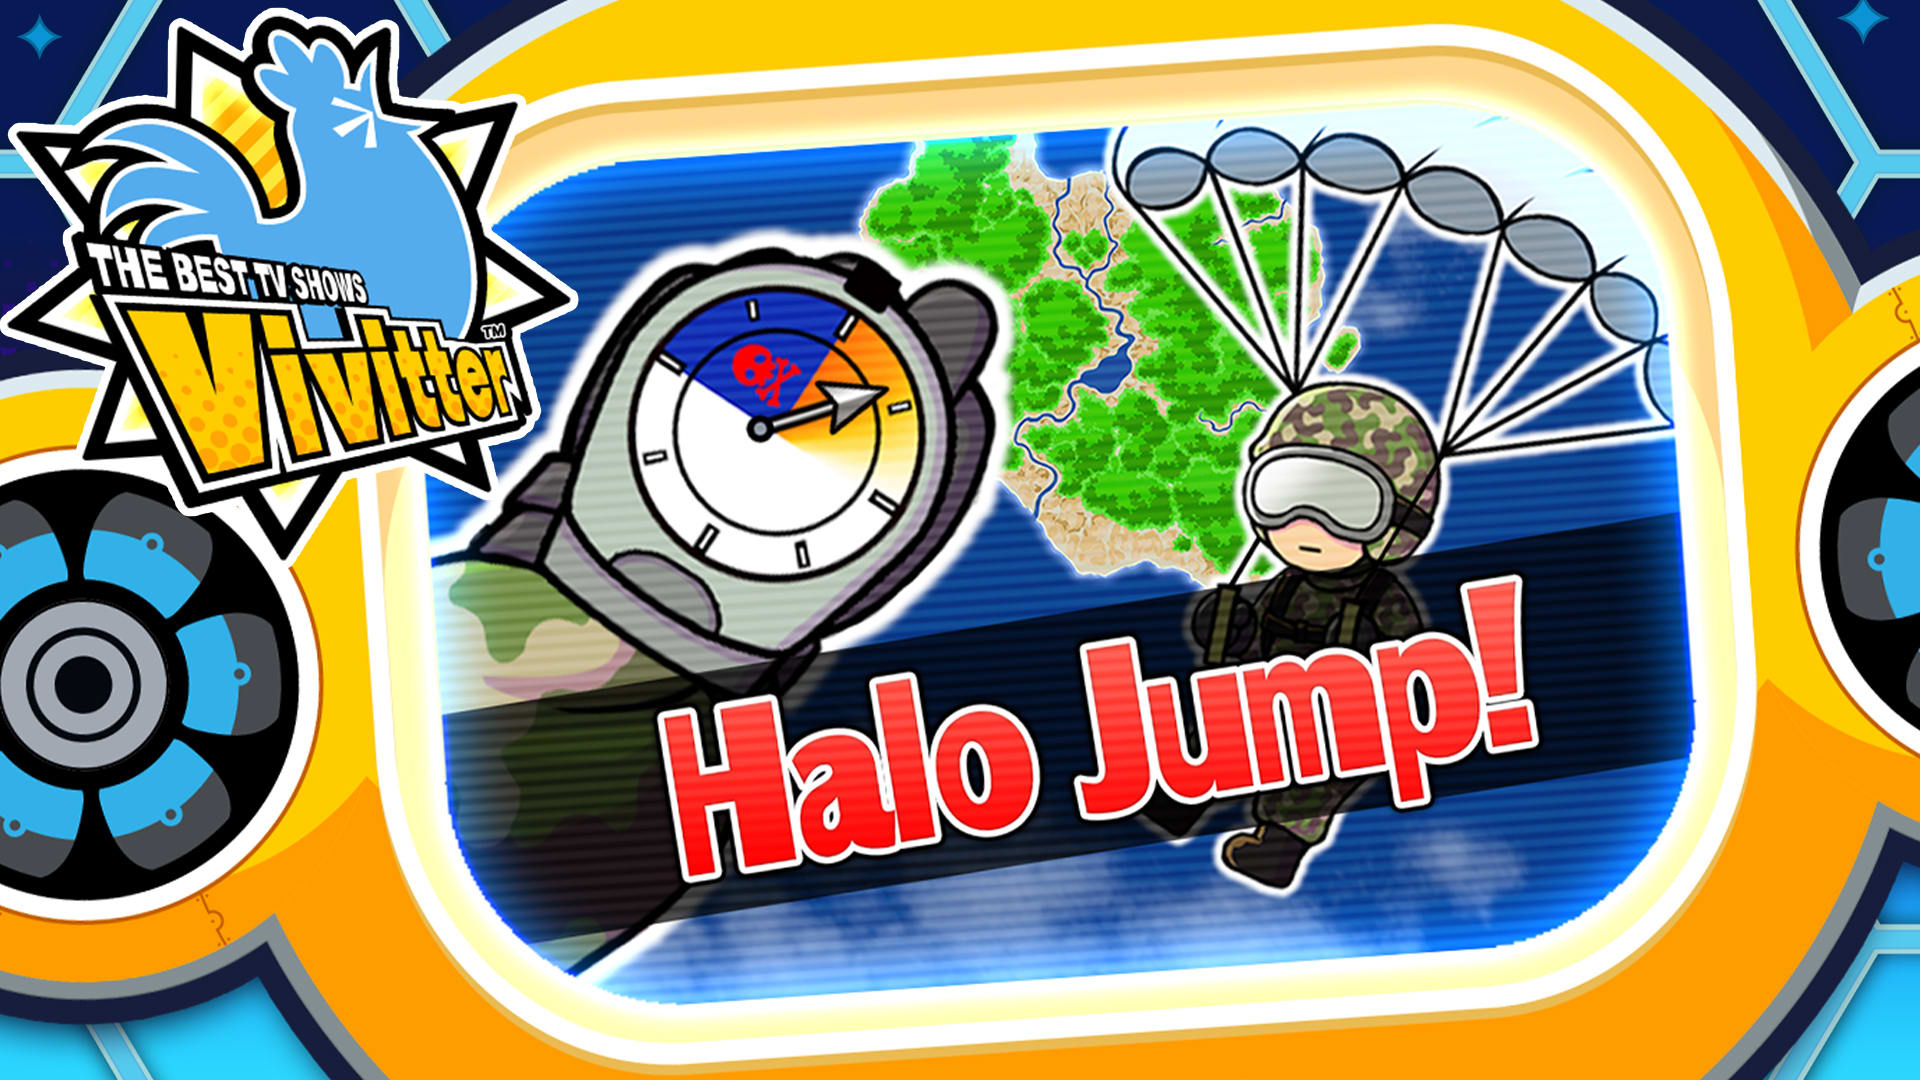 Additional mini-game "Halo Jump!"